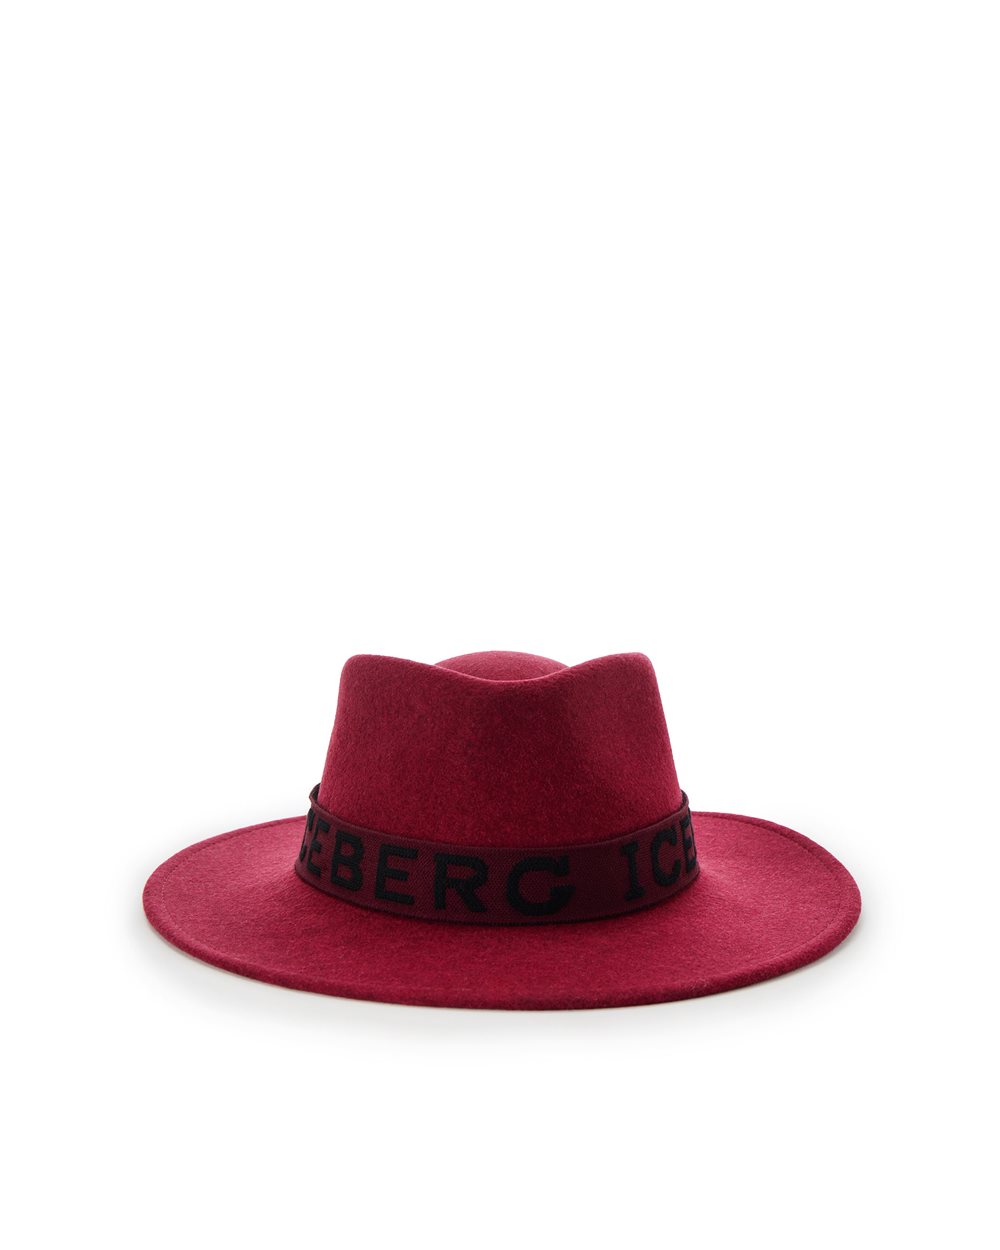 Burberry Reversible Logo Print Cotton Gabardine Bucket Hat Black in Cotton  - US